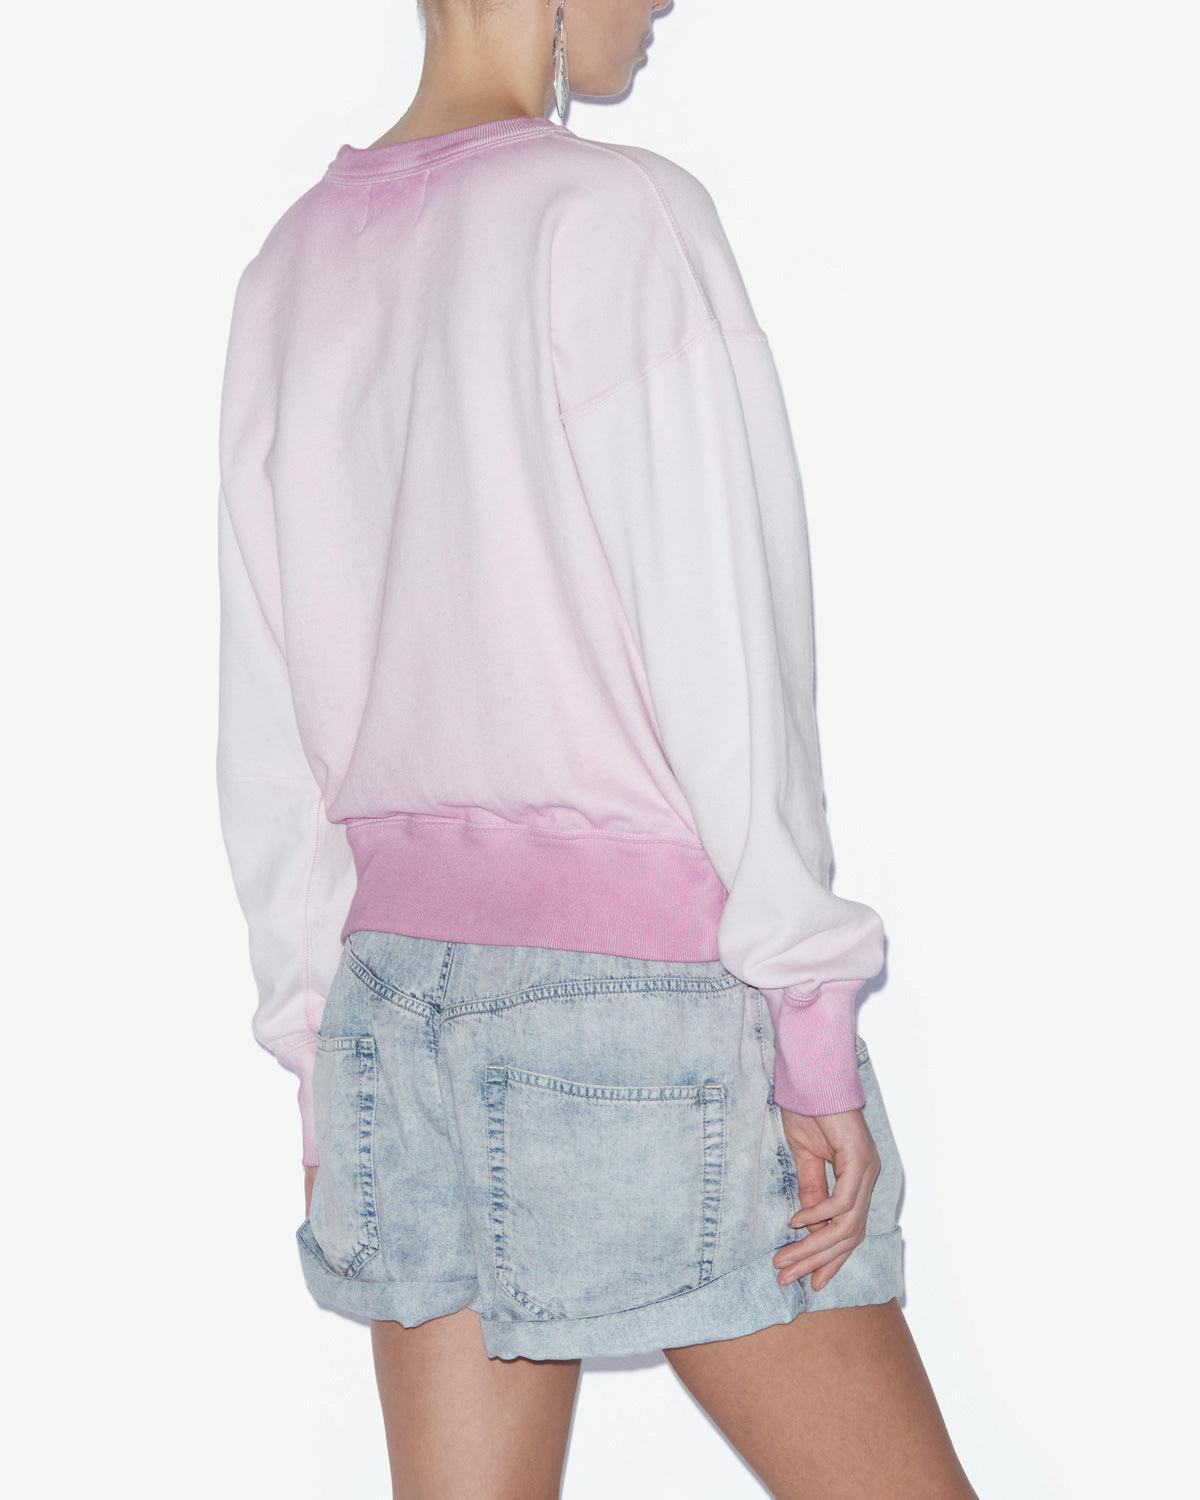 Mobyli sweatshirt Woman Lilac 3